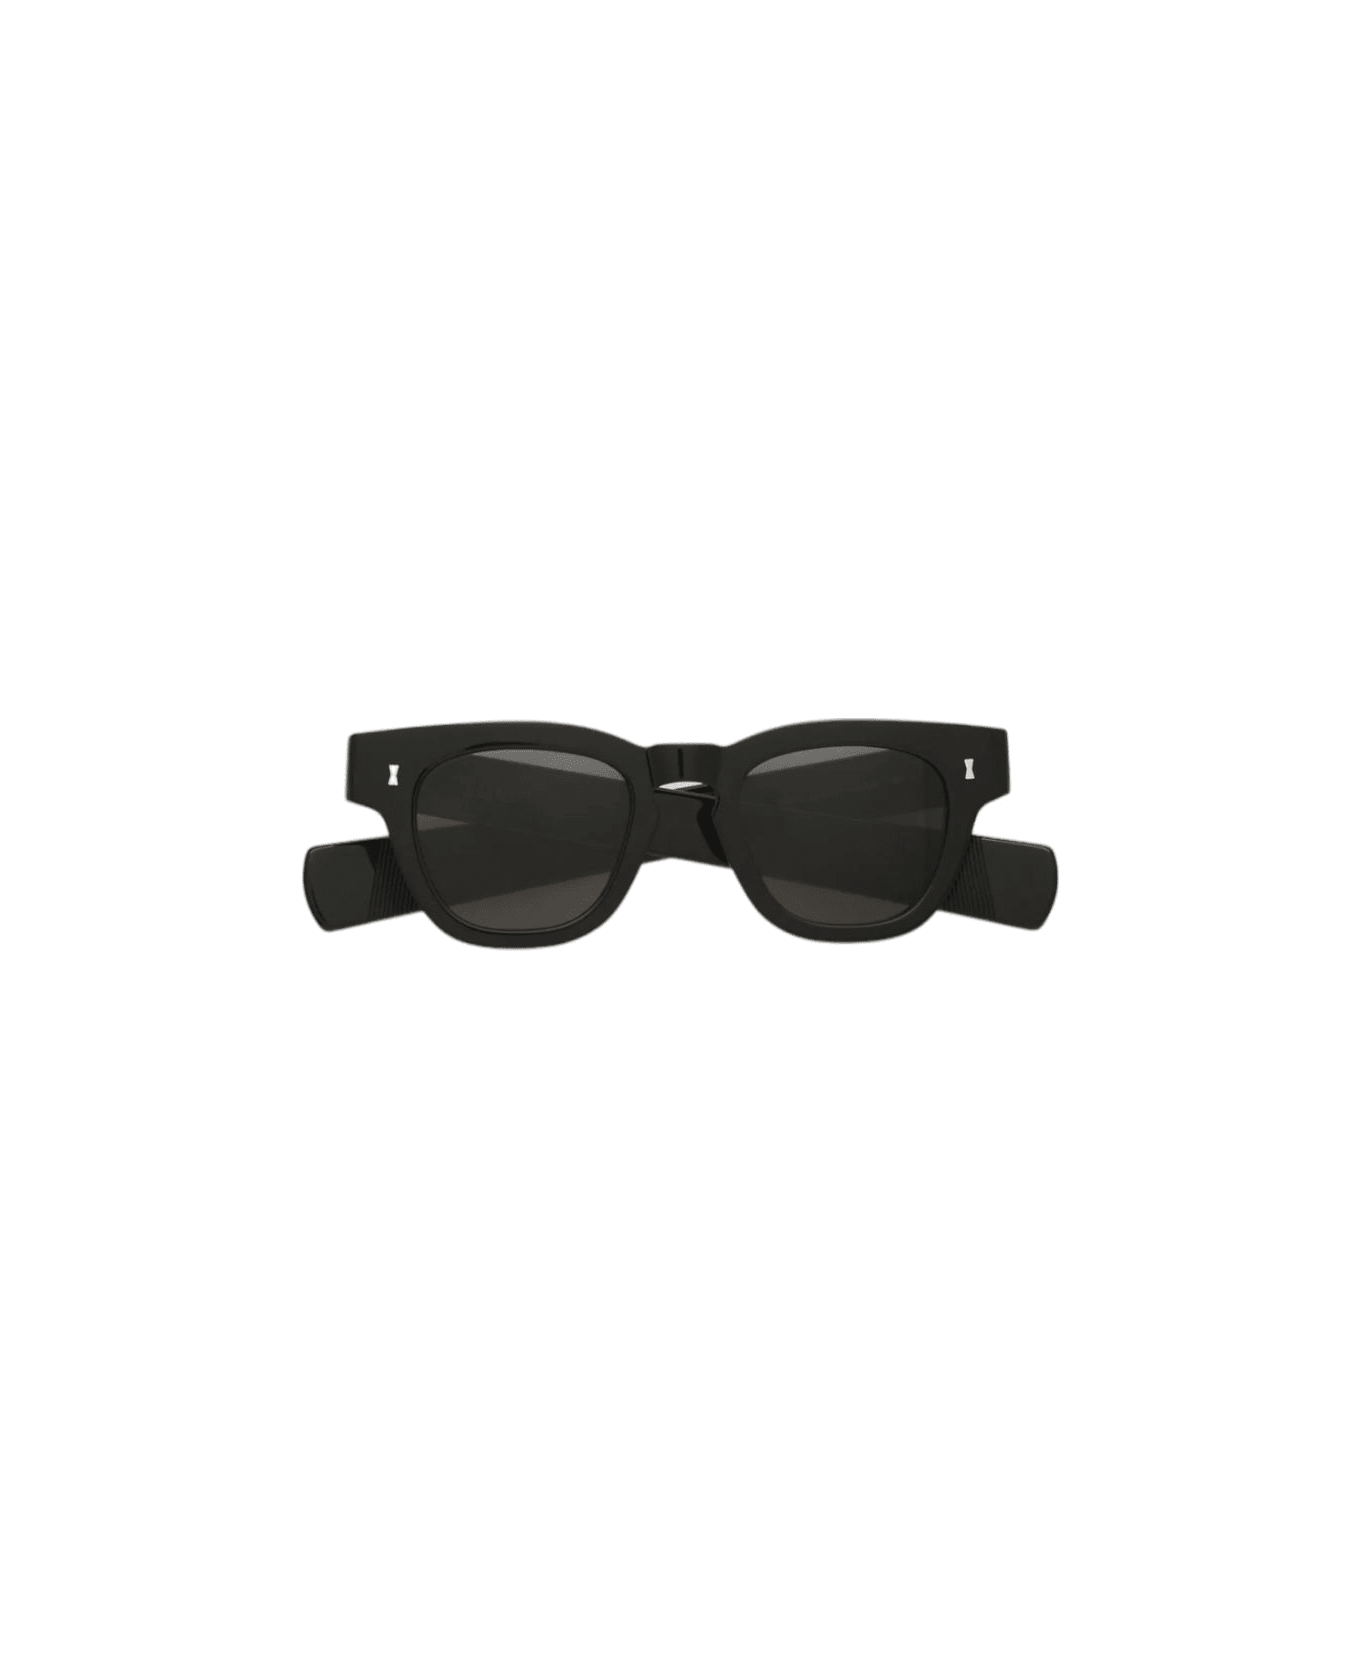 Cubitts Cruishank - Black Sunglasses サングラス